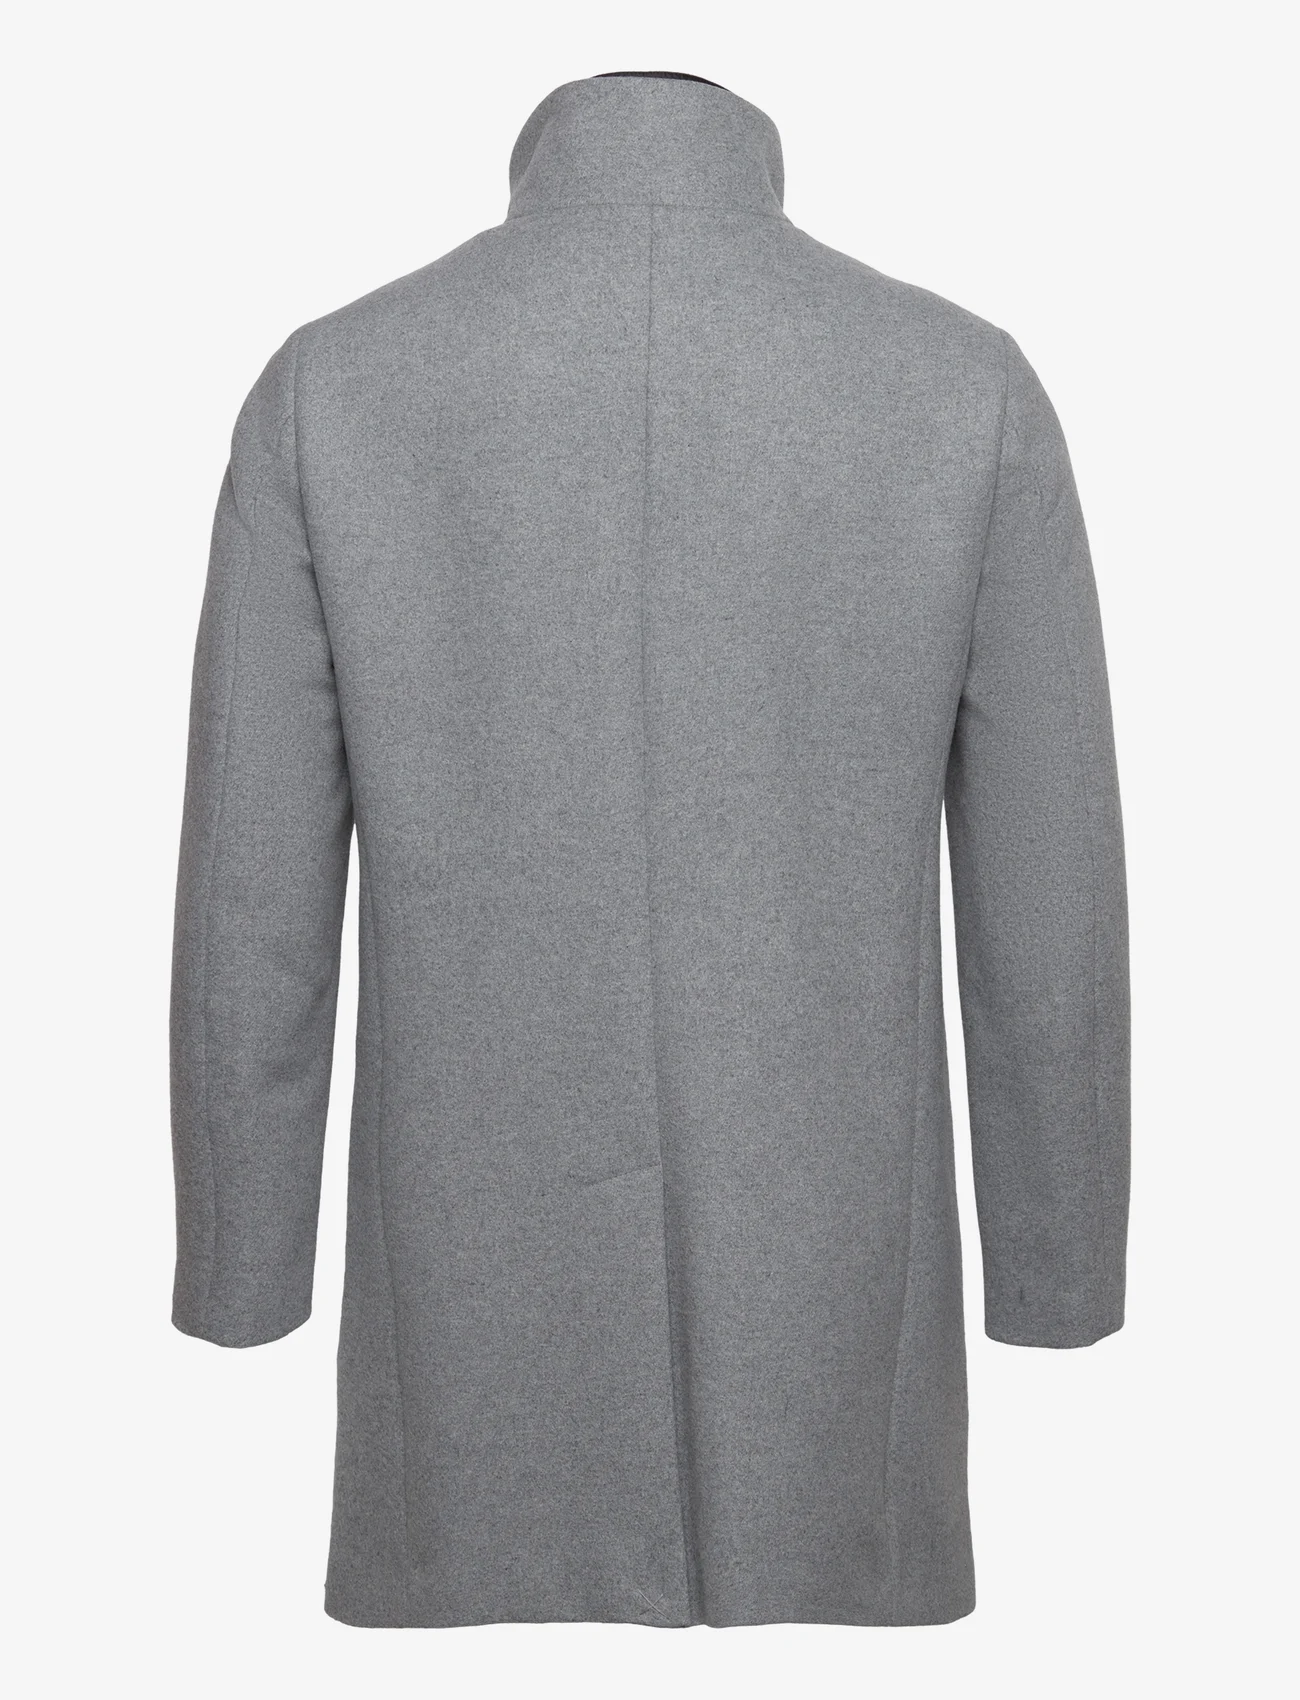 Matinique - MARobert - winter jackets - light grey melange - 1